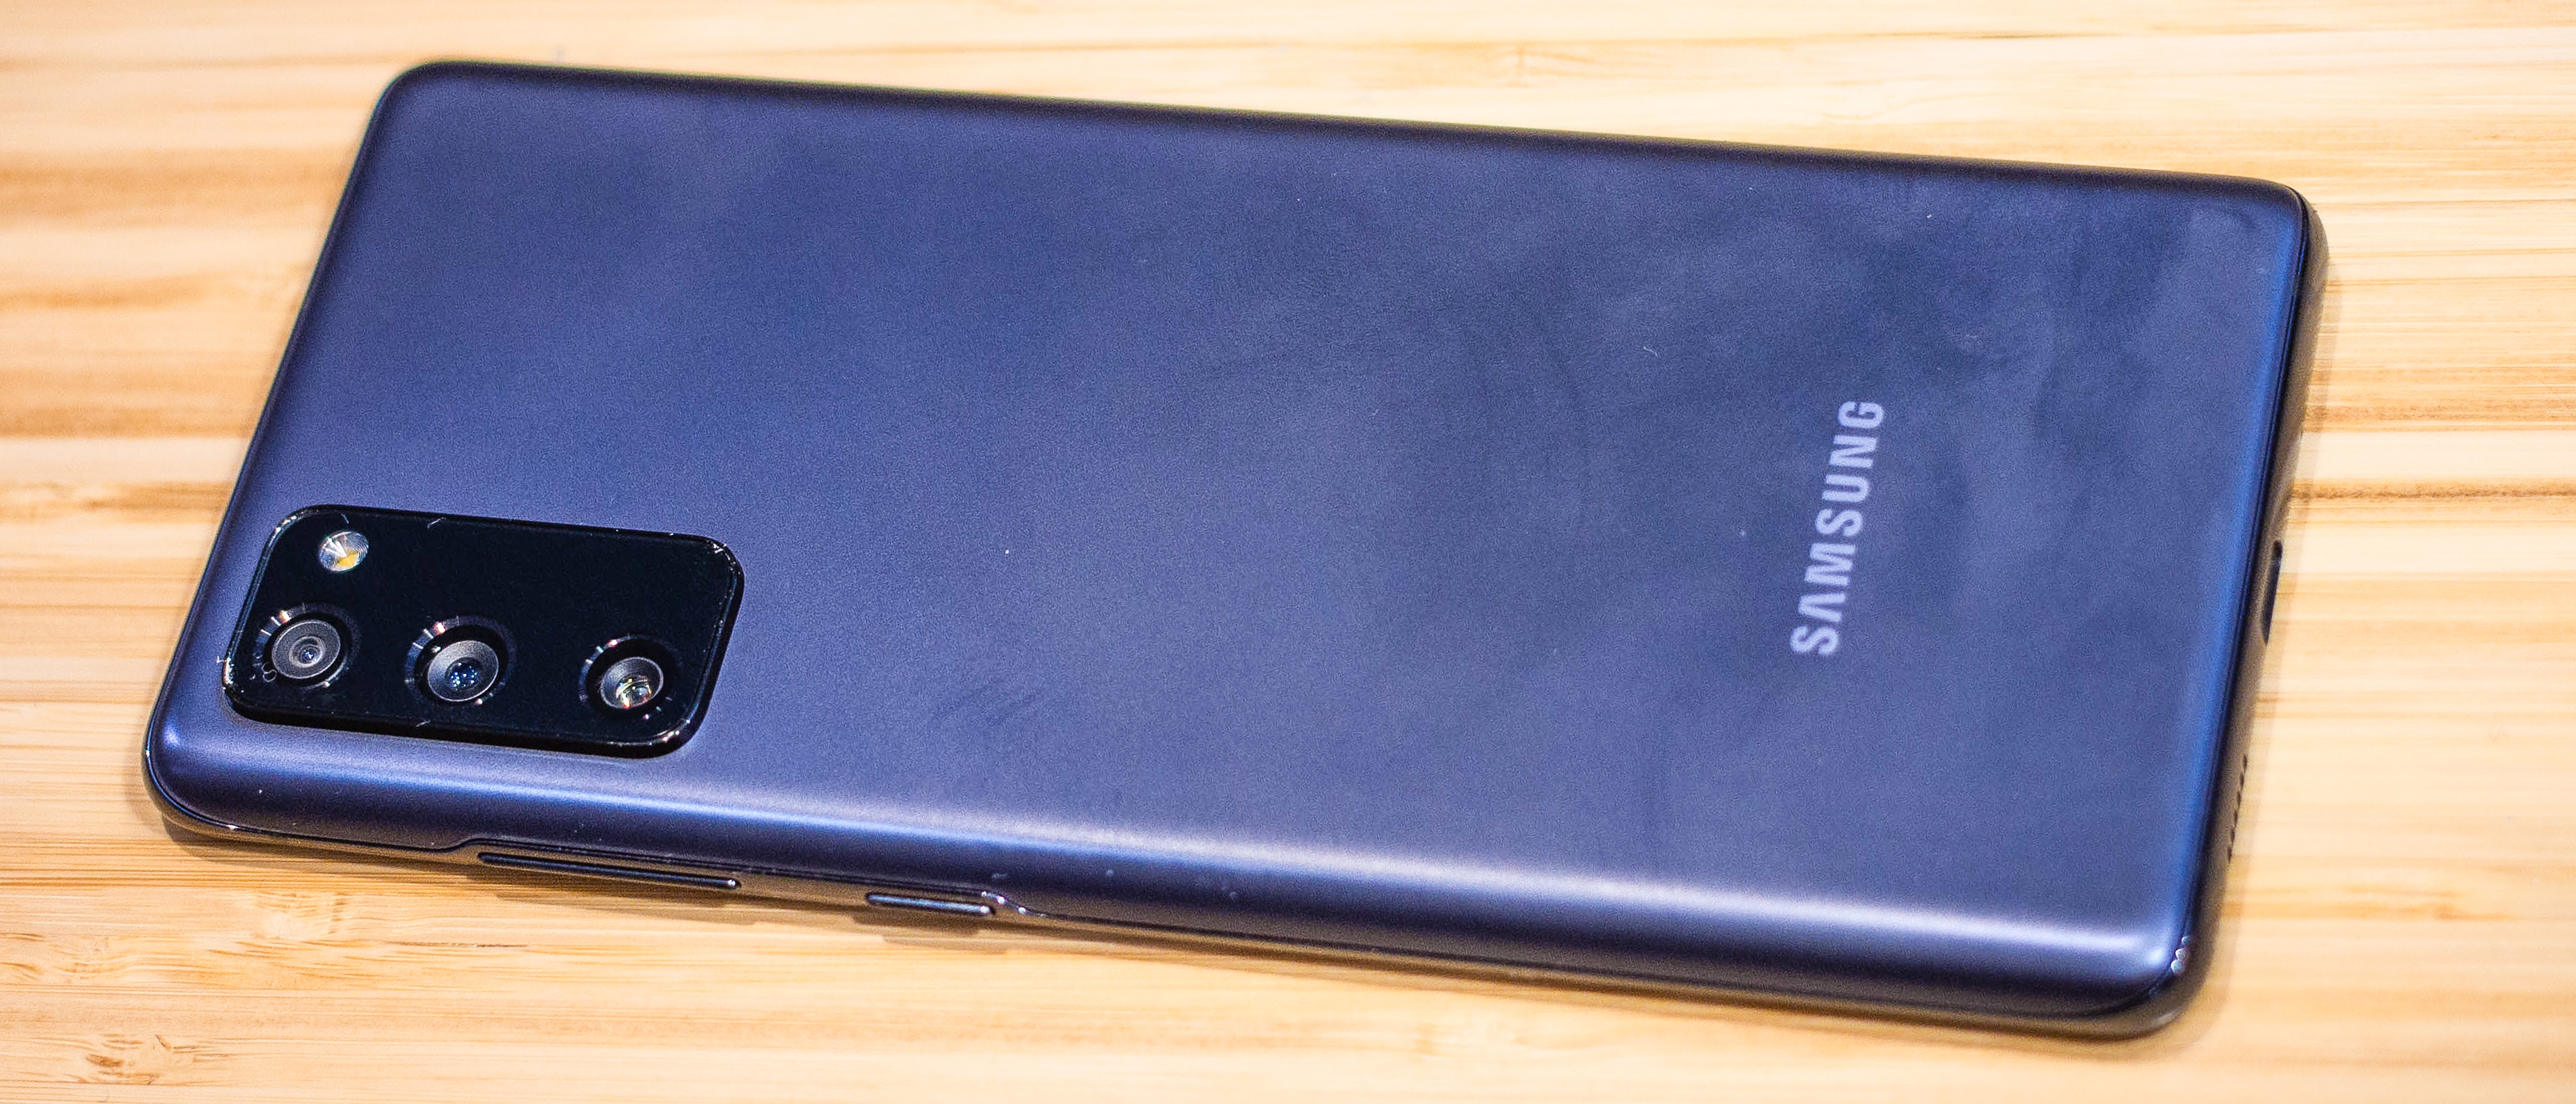 Samsung Galaxy S20 FE 5G review: Camera quality